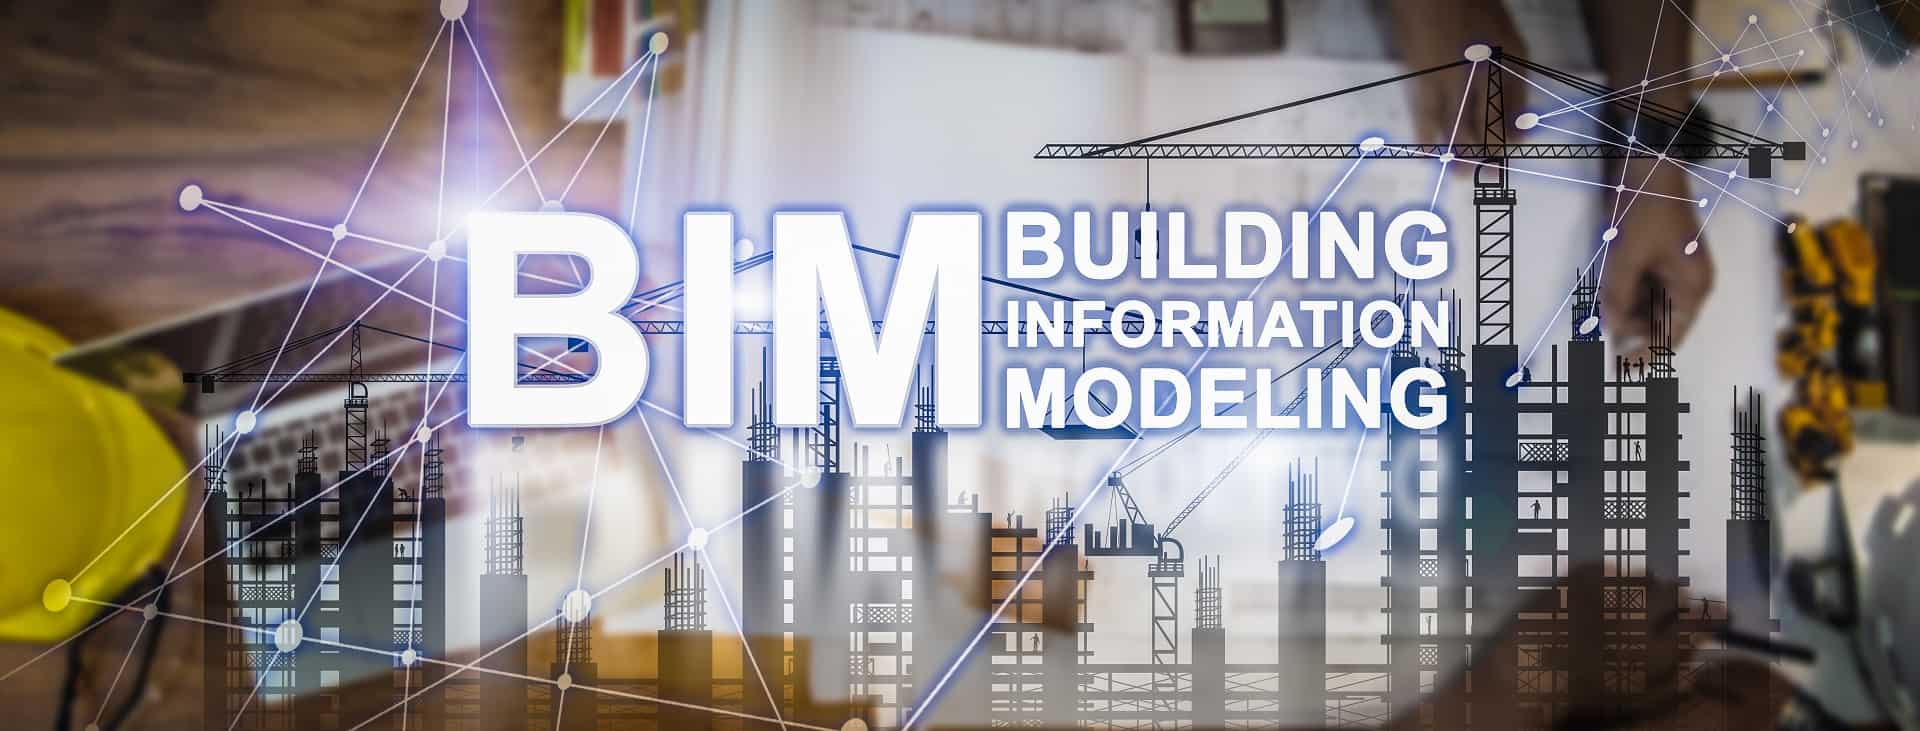 Technologia BIM (Building Information Modeling)